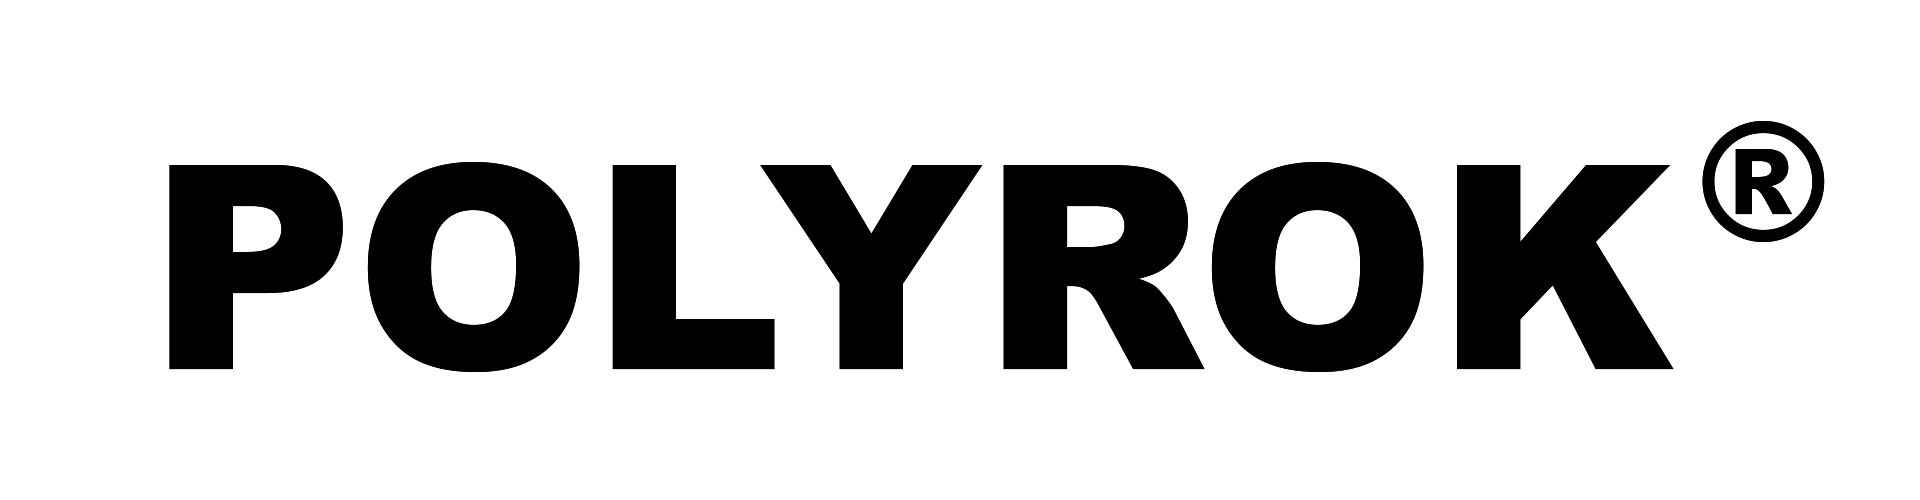 Polyrok-Logo-Black